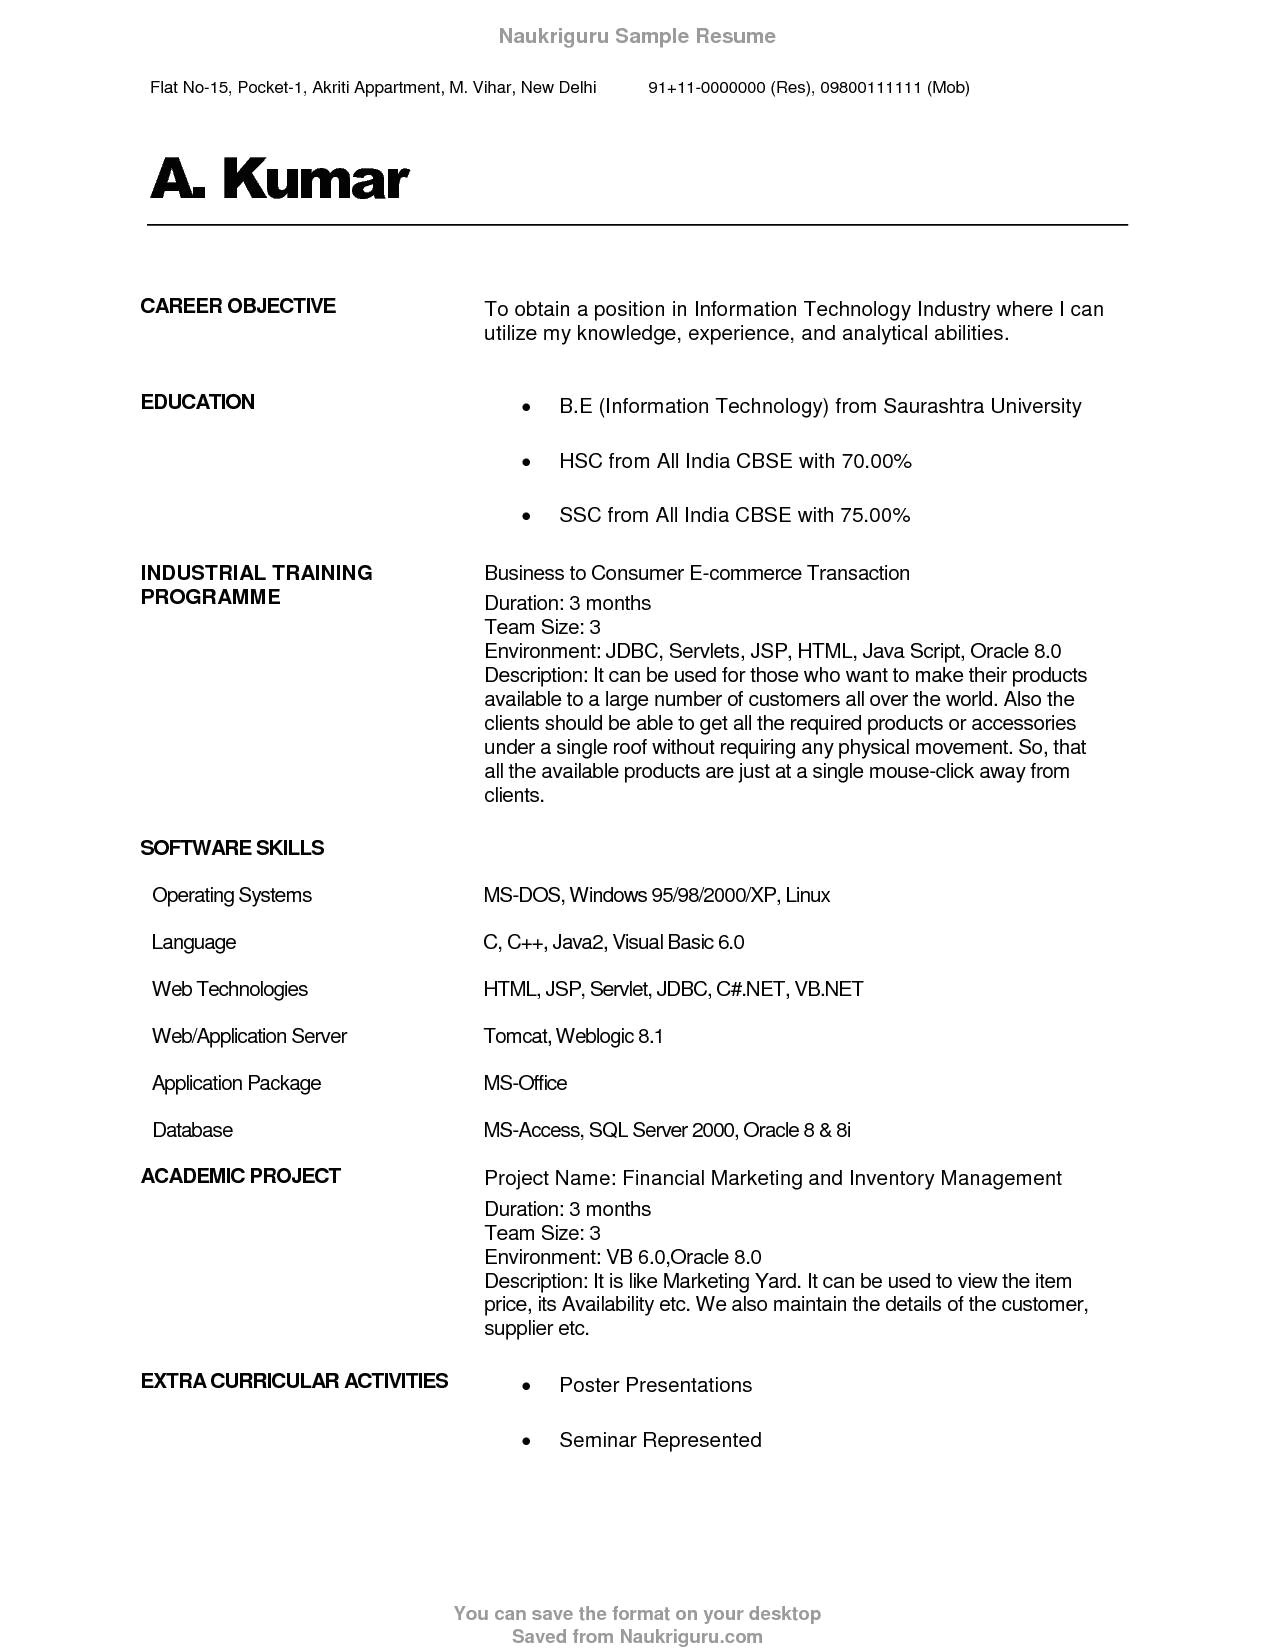 hr executive resume sample in india beautiful sample resume for mba fresher twentyeandi